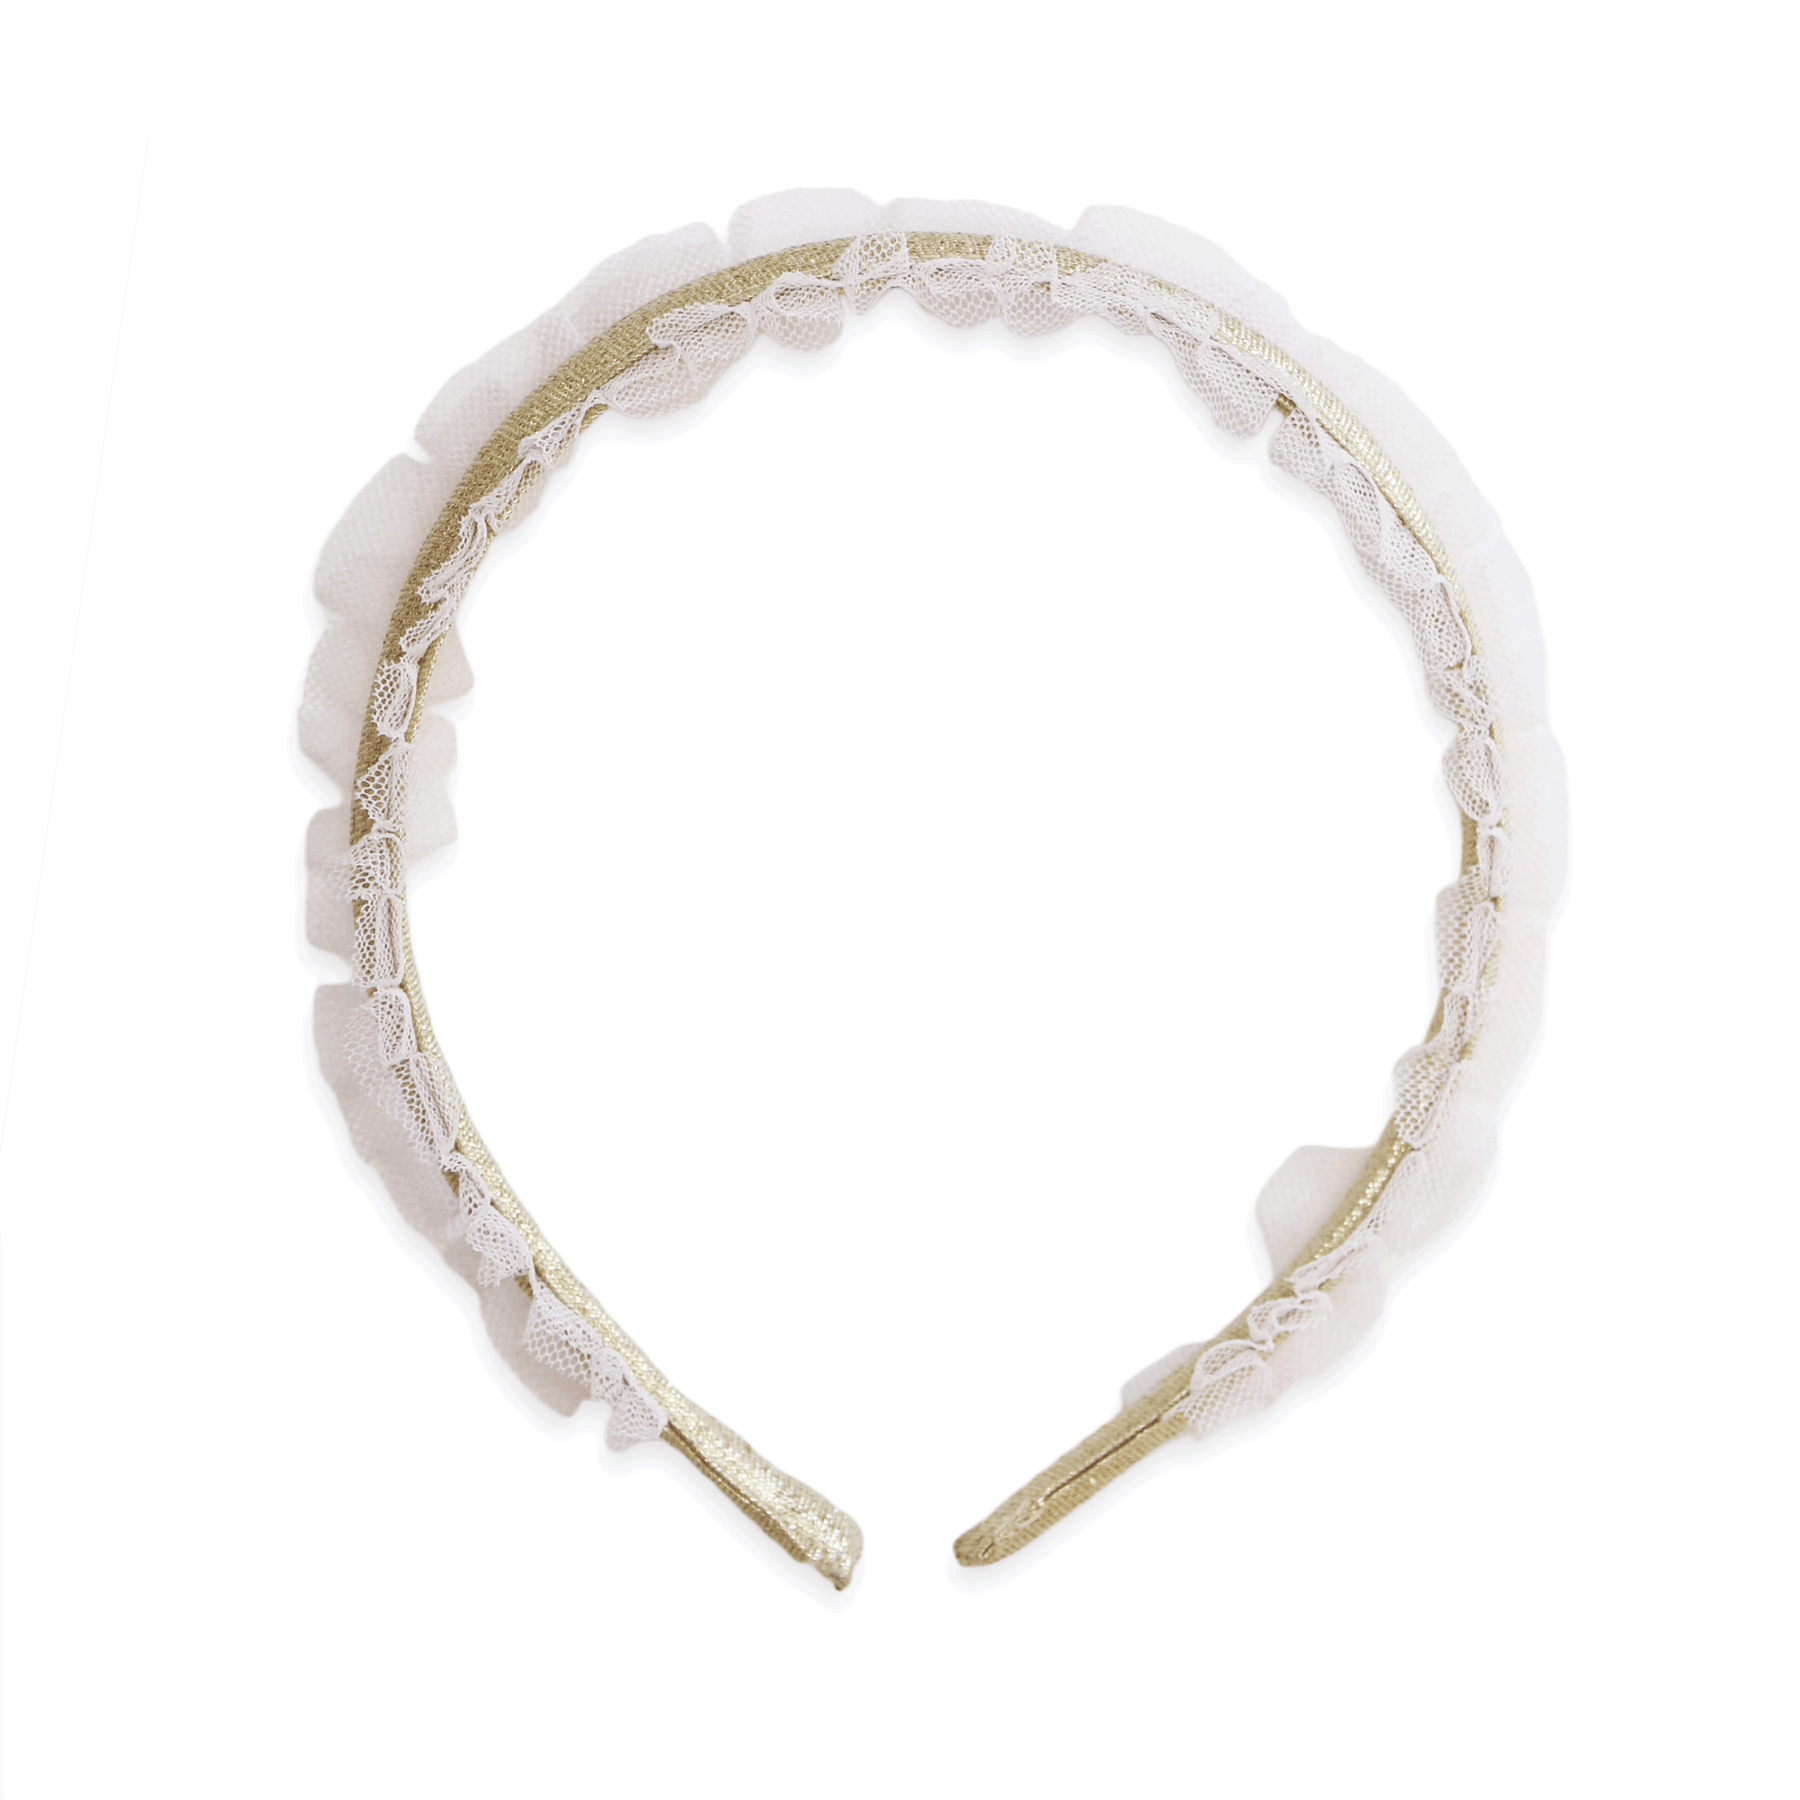 Swan Headband- Gold and White